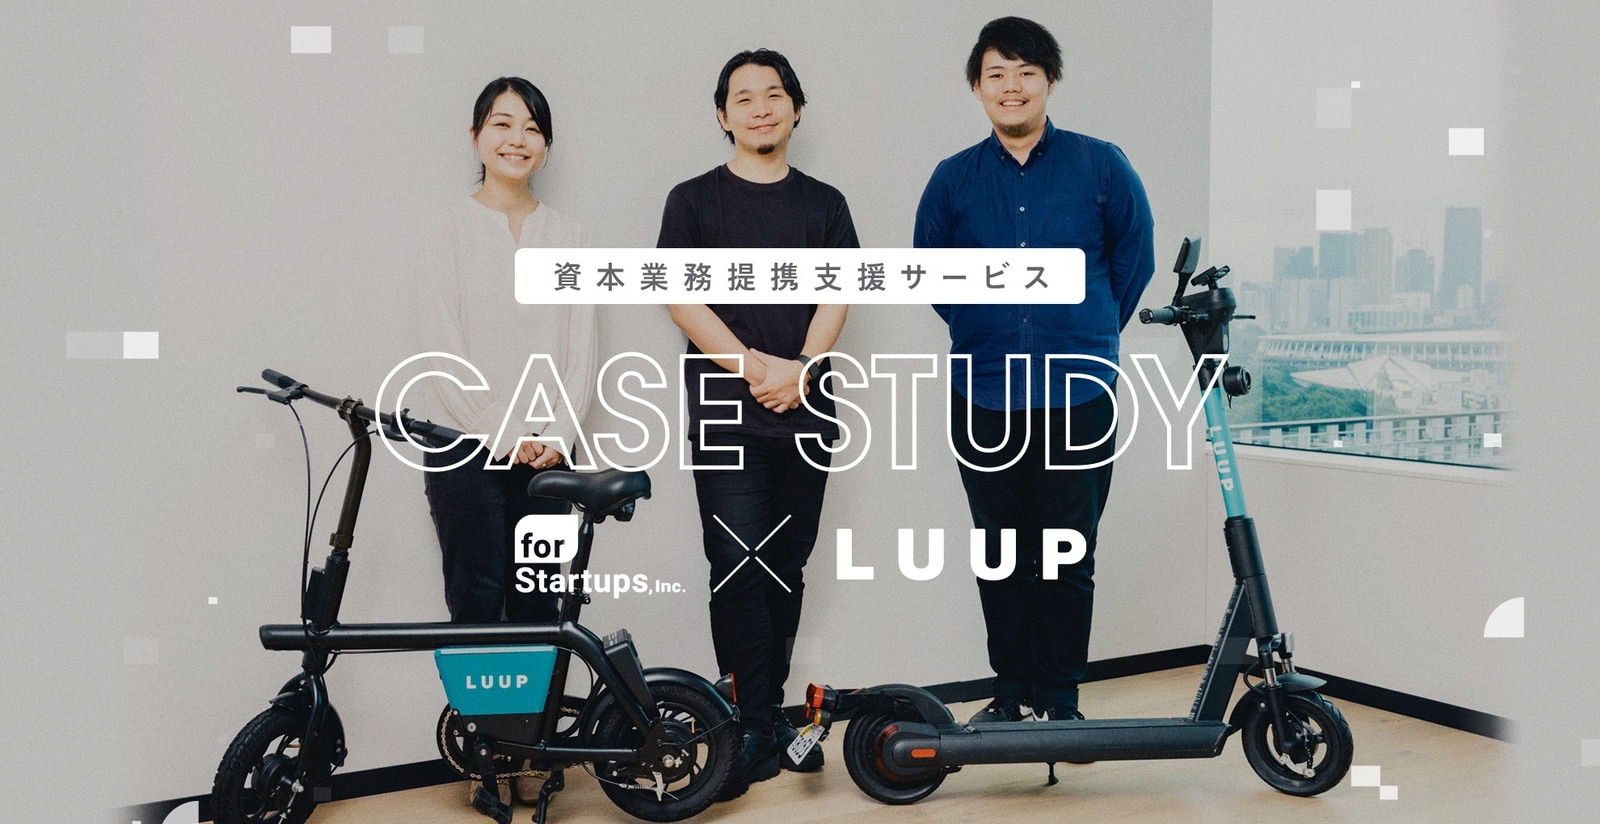 luup_forstartups